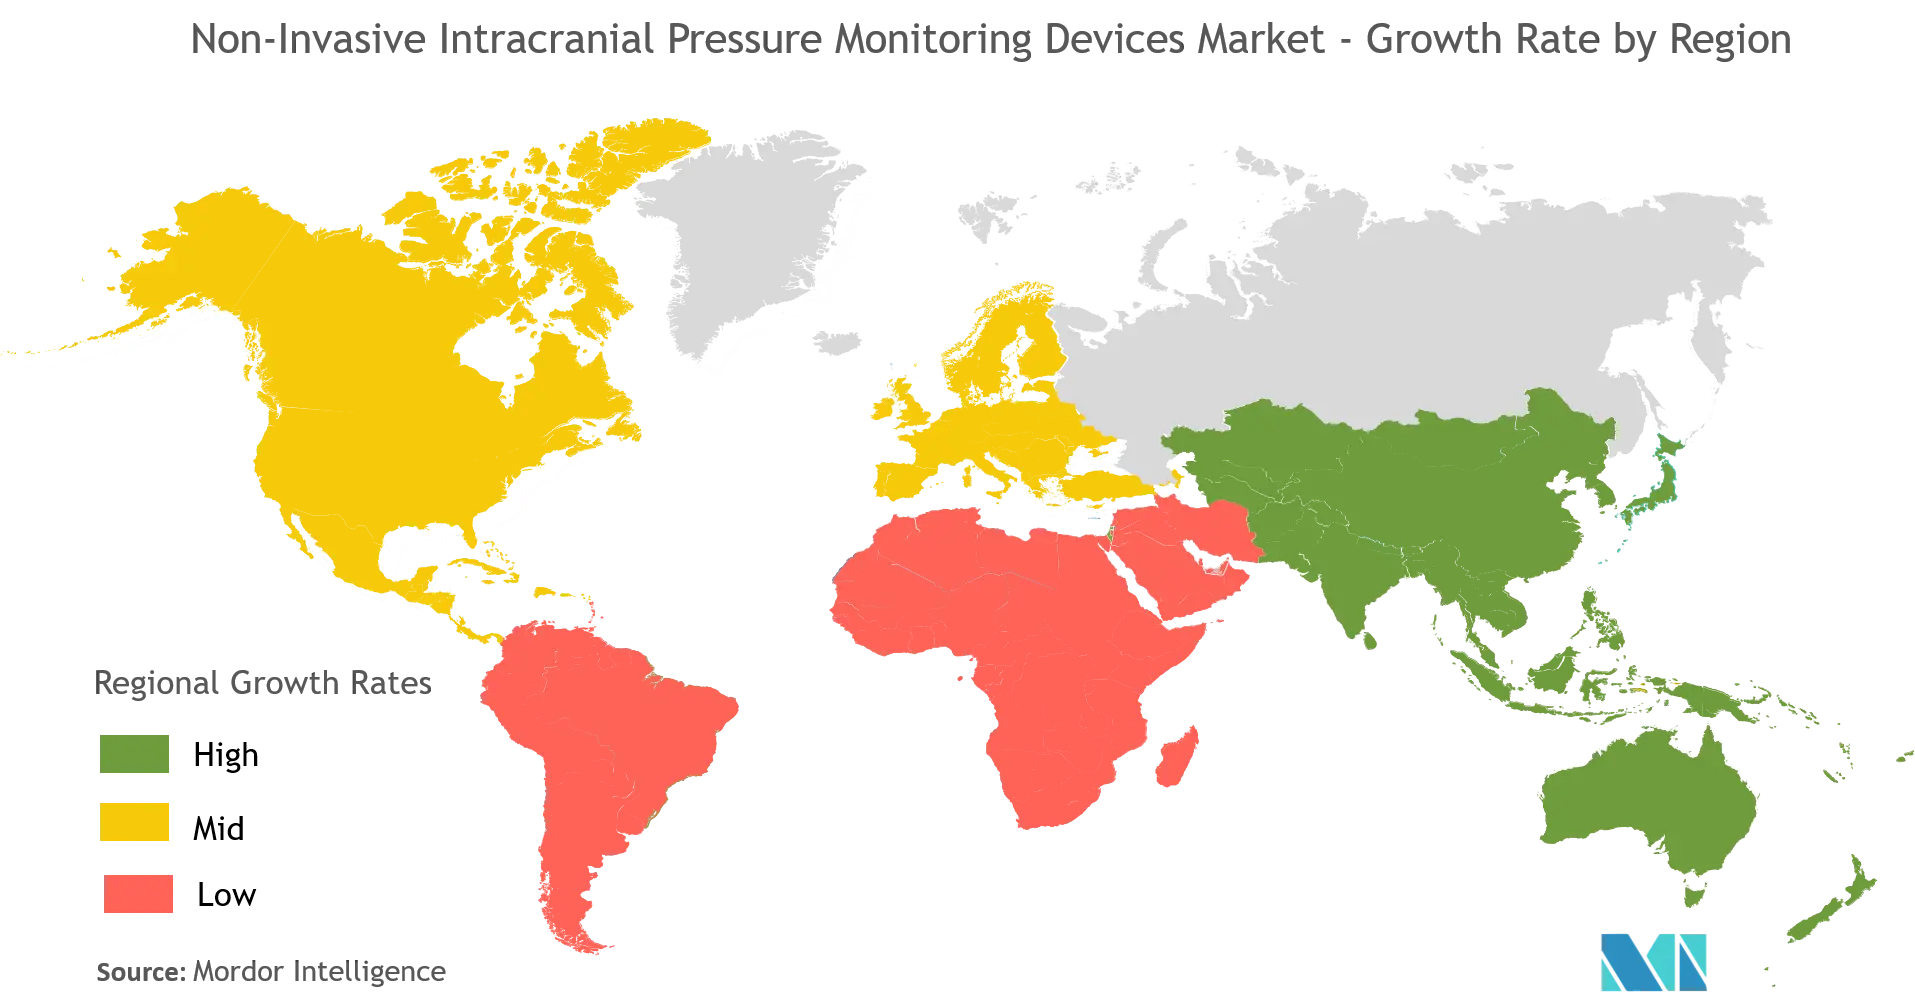 non-invasive monitoring device market growth